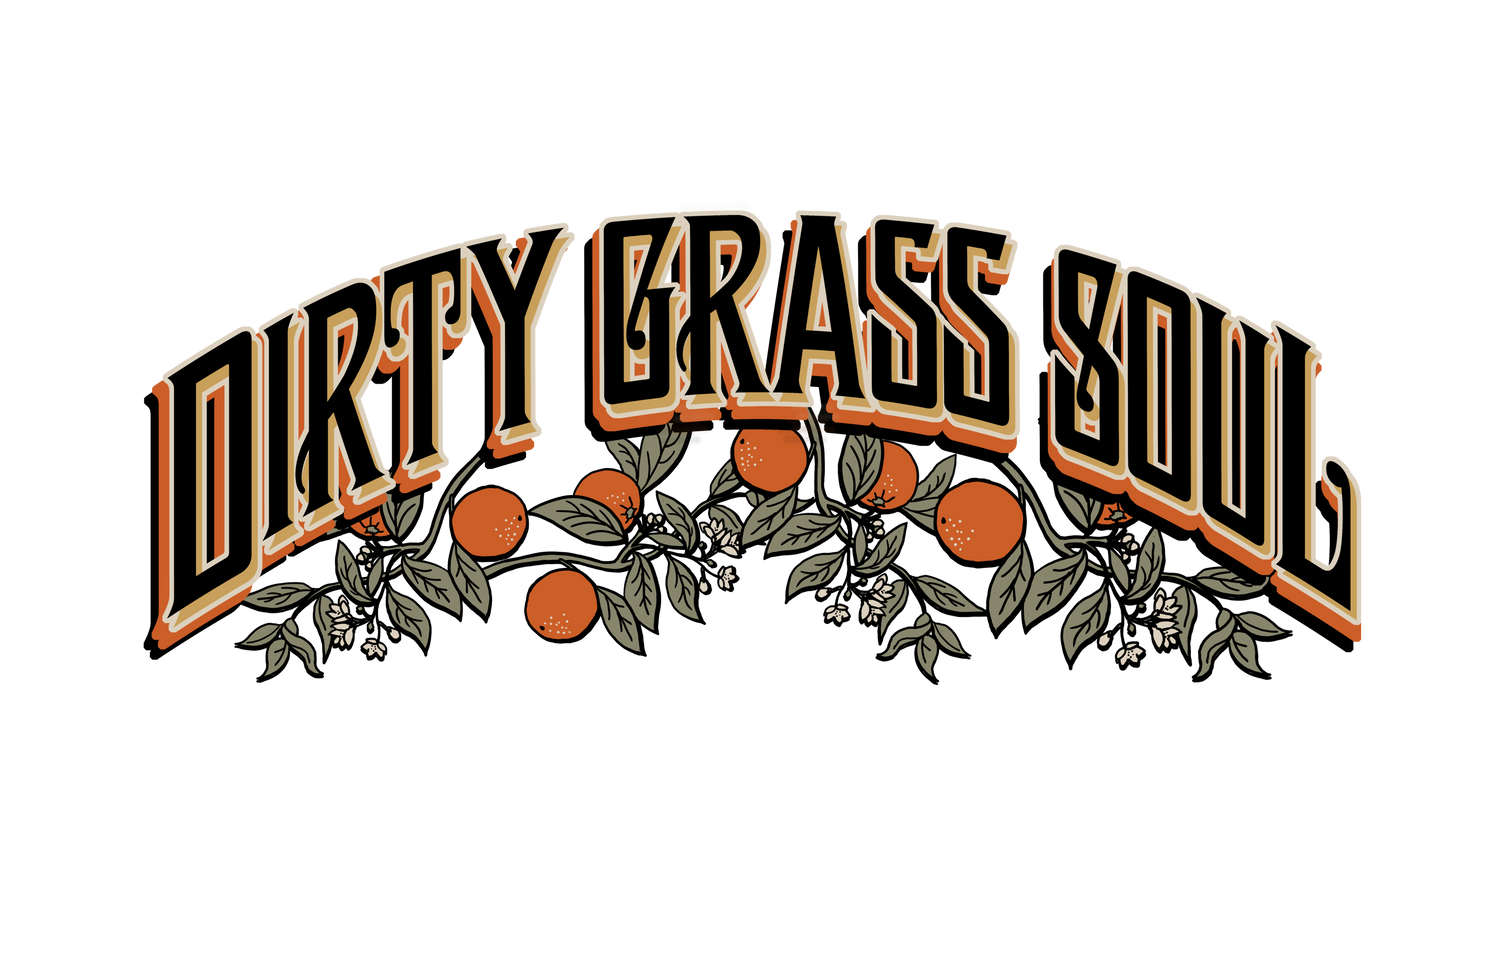 Dirty Grass Soul